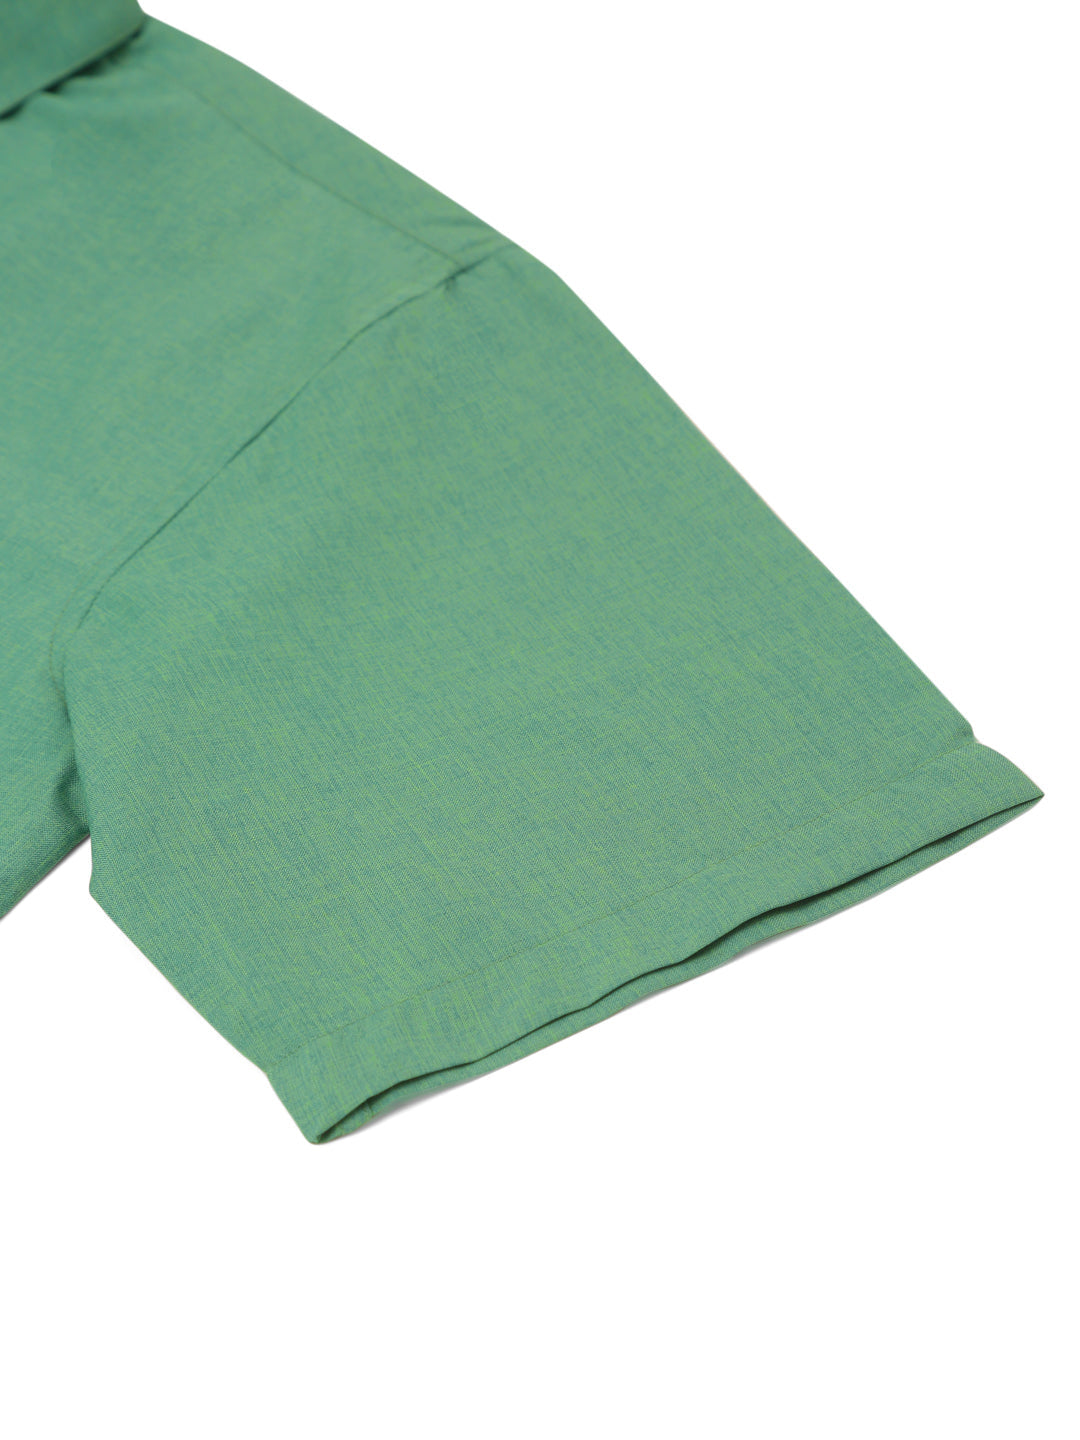 Men's Cotton Solid Half Sleeve Formal Shirts ( SF 811Green ) - Jainish